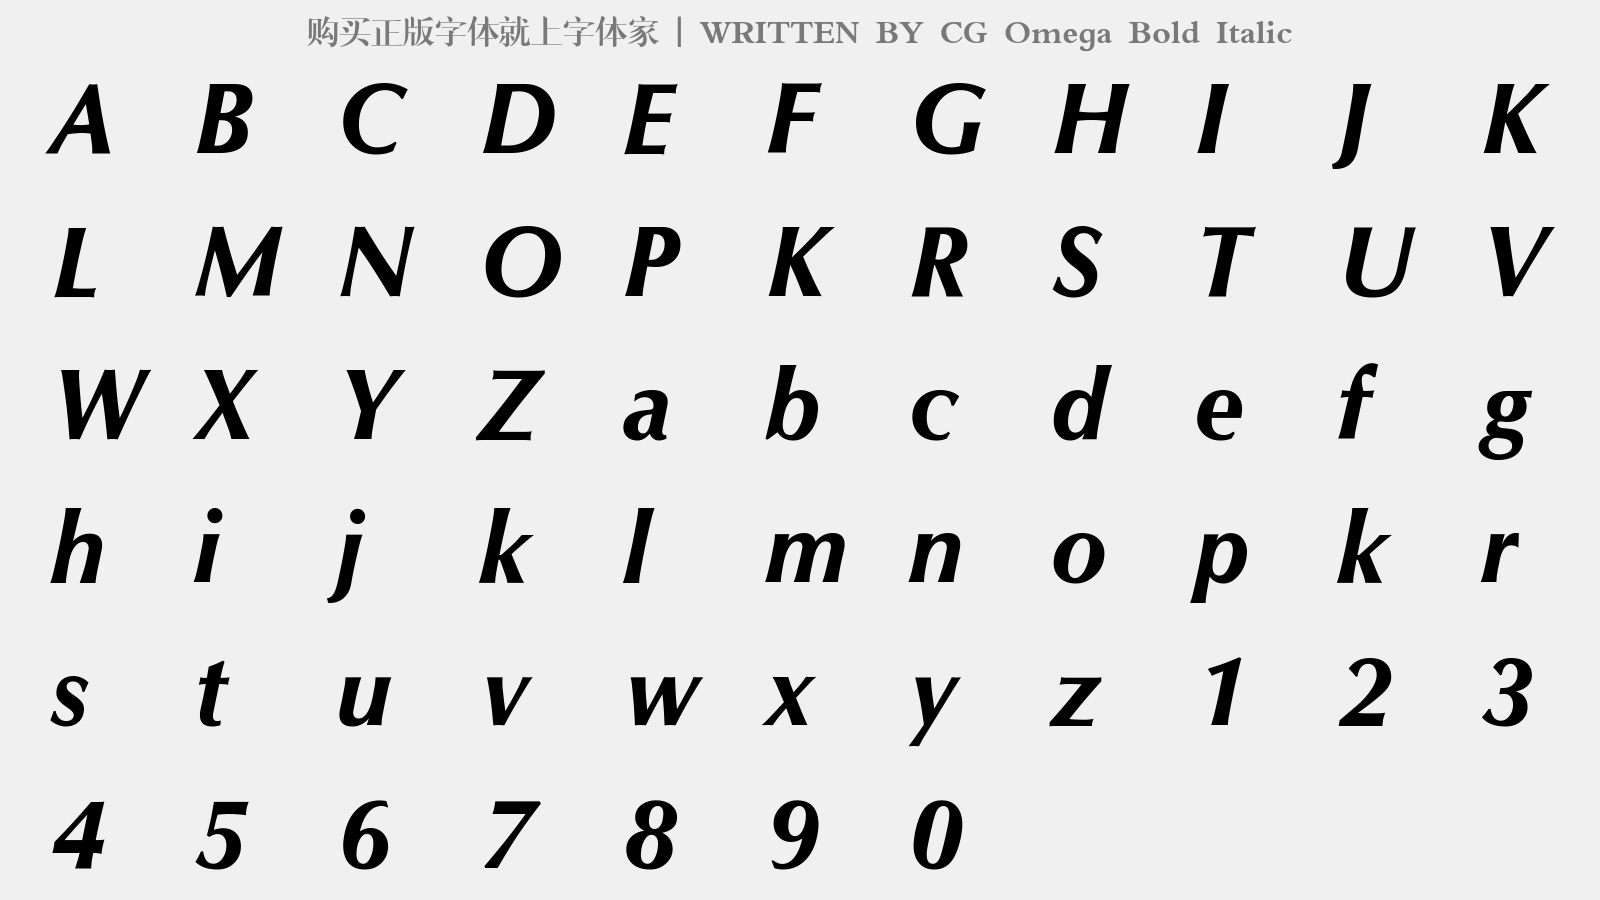 CG Omega Bold Italic - 大写字母/小写字母/数字